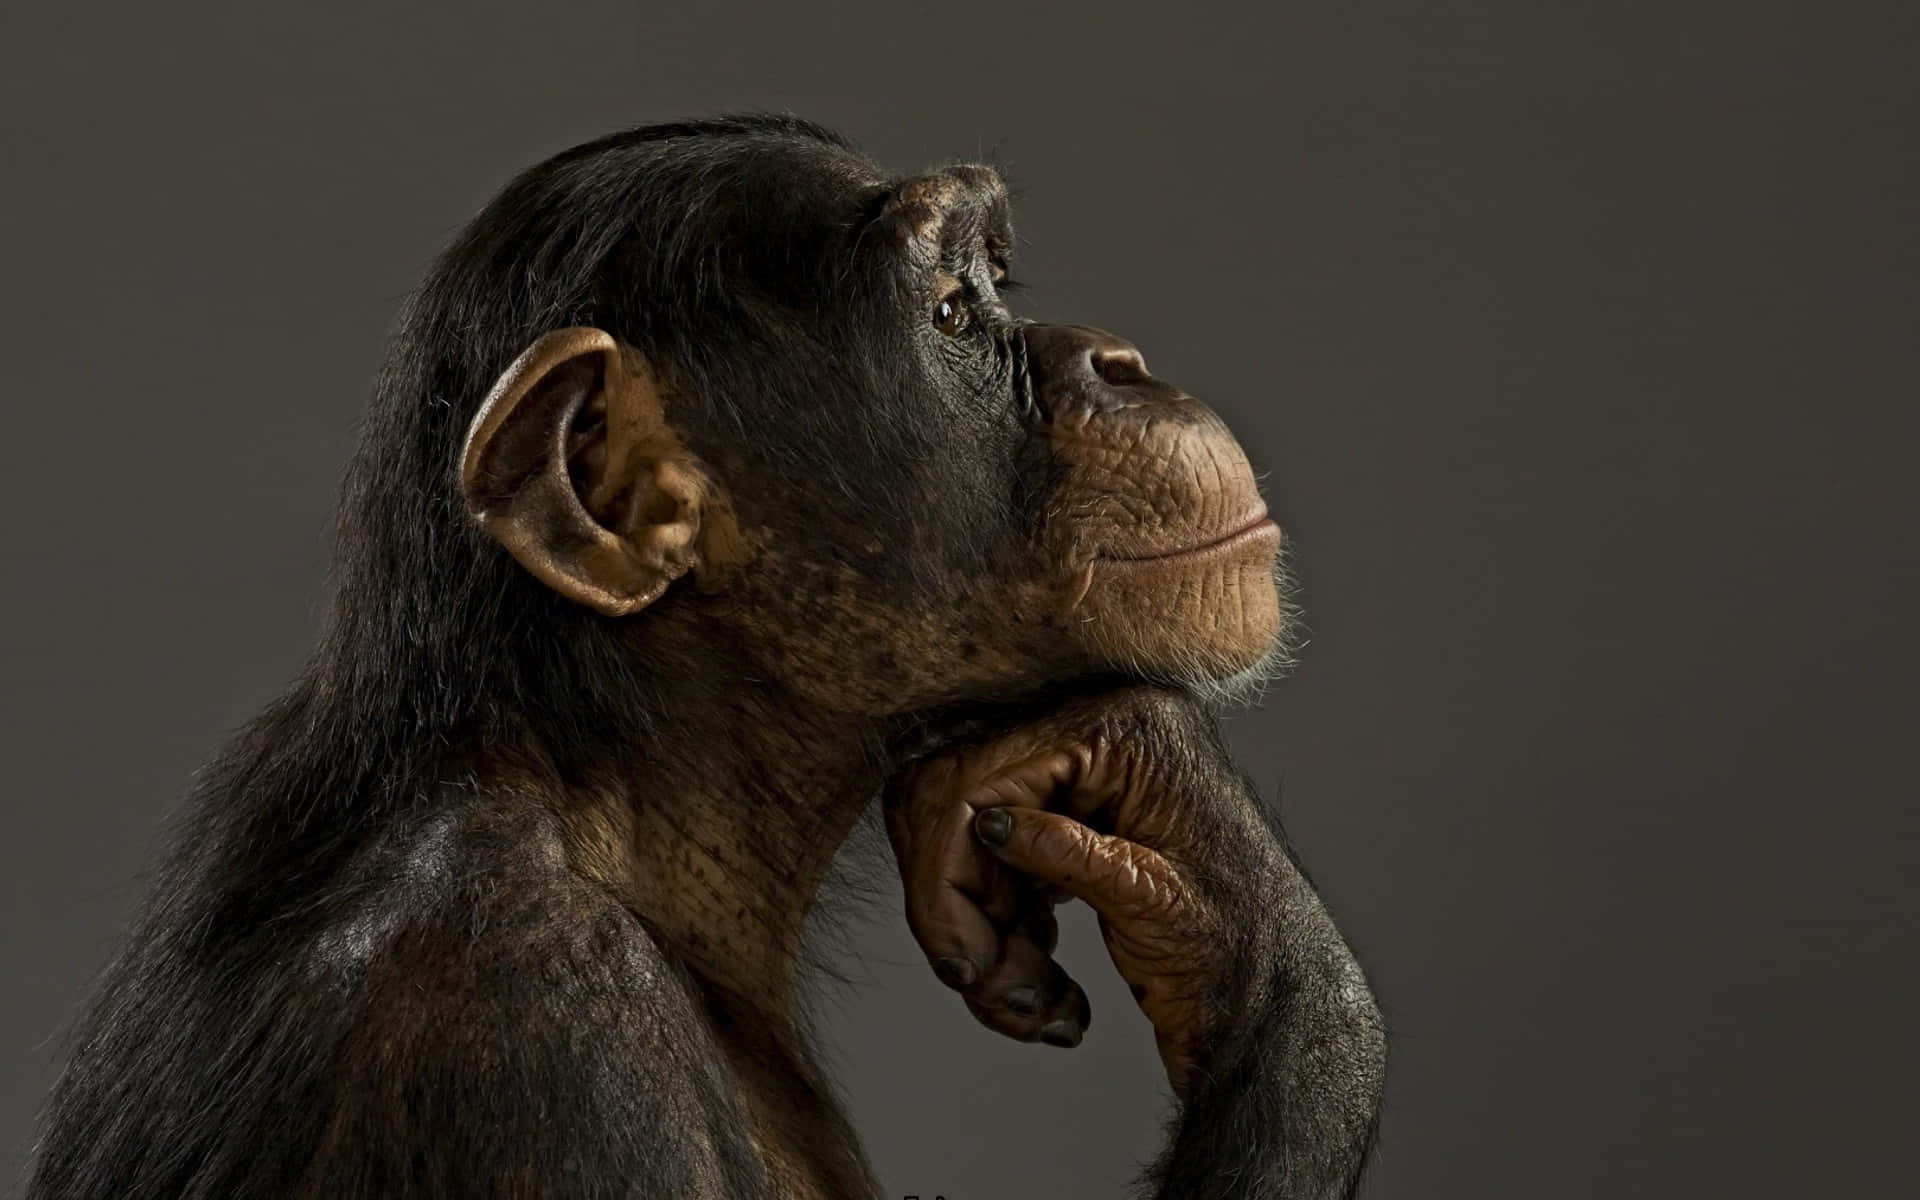 Chimpanzee Black Monkey Portrait Picture